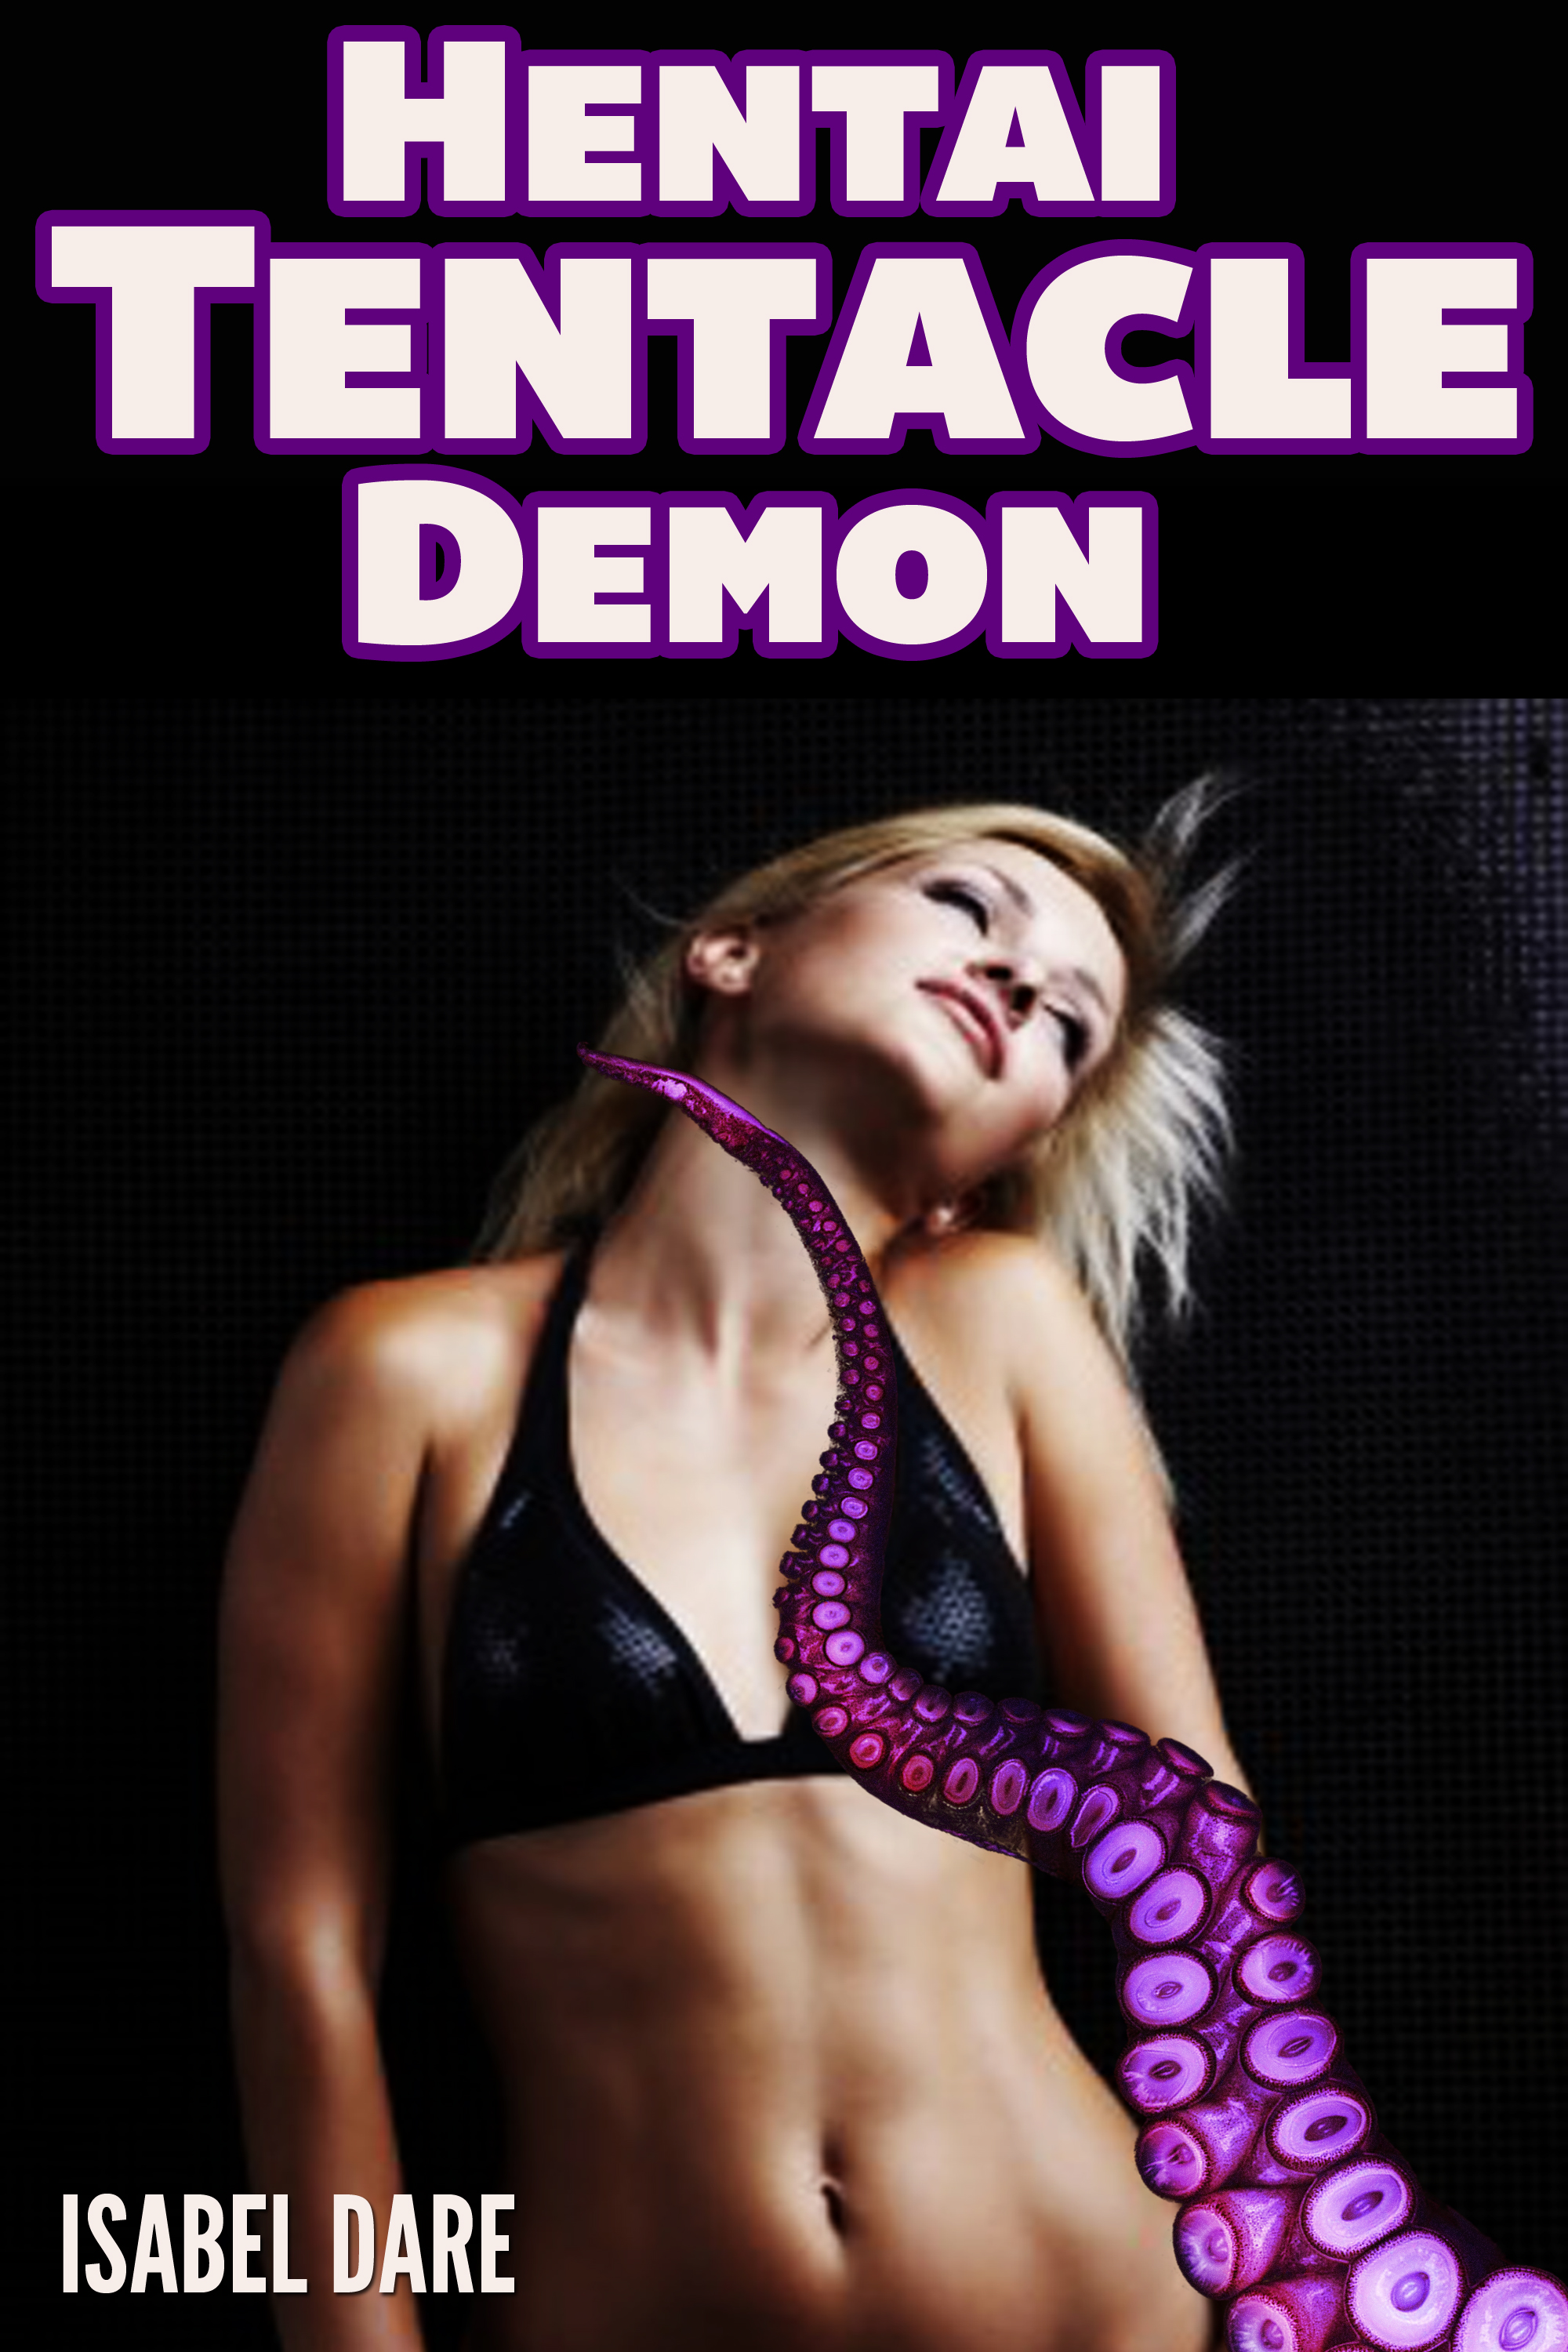 Hentai Demon Monster - Hentai Tentacle Demon (Tentacle Monster Erotica), an Ebook by Isabel Dare